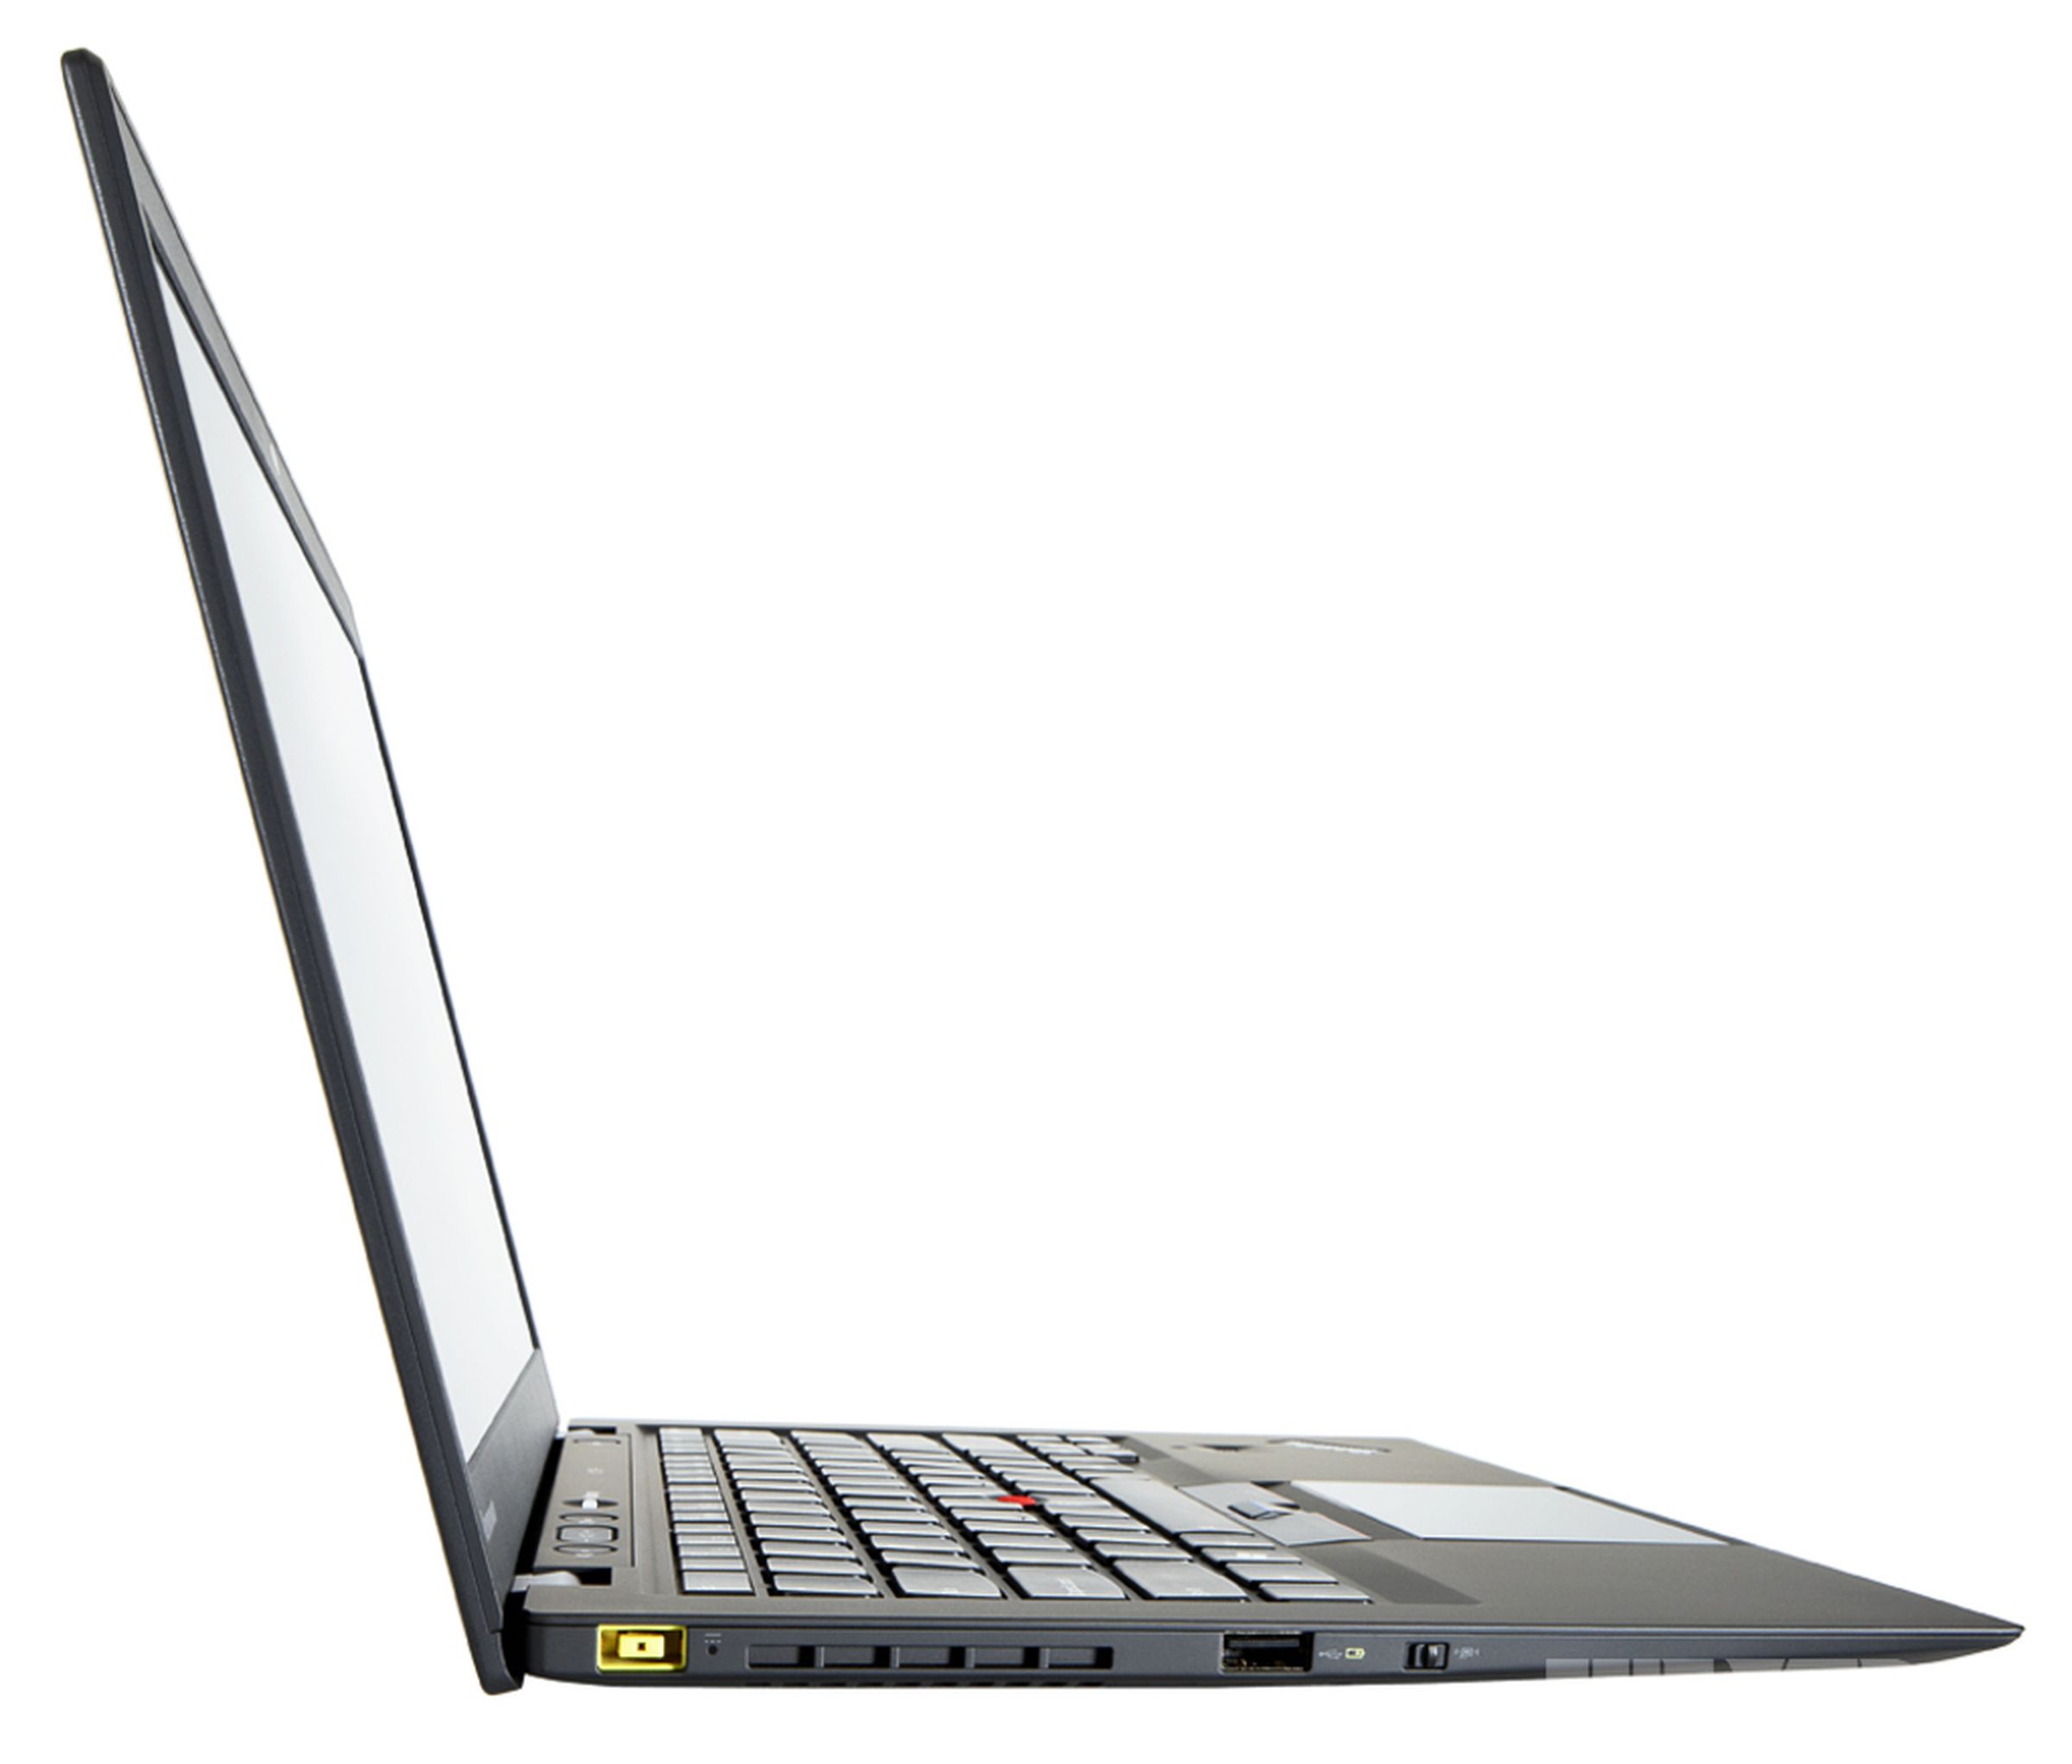 Lenovo ThinkPad X1 Carbon press pictures